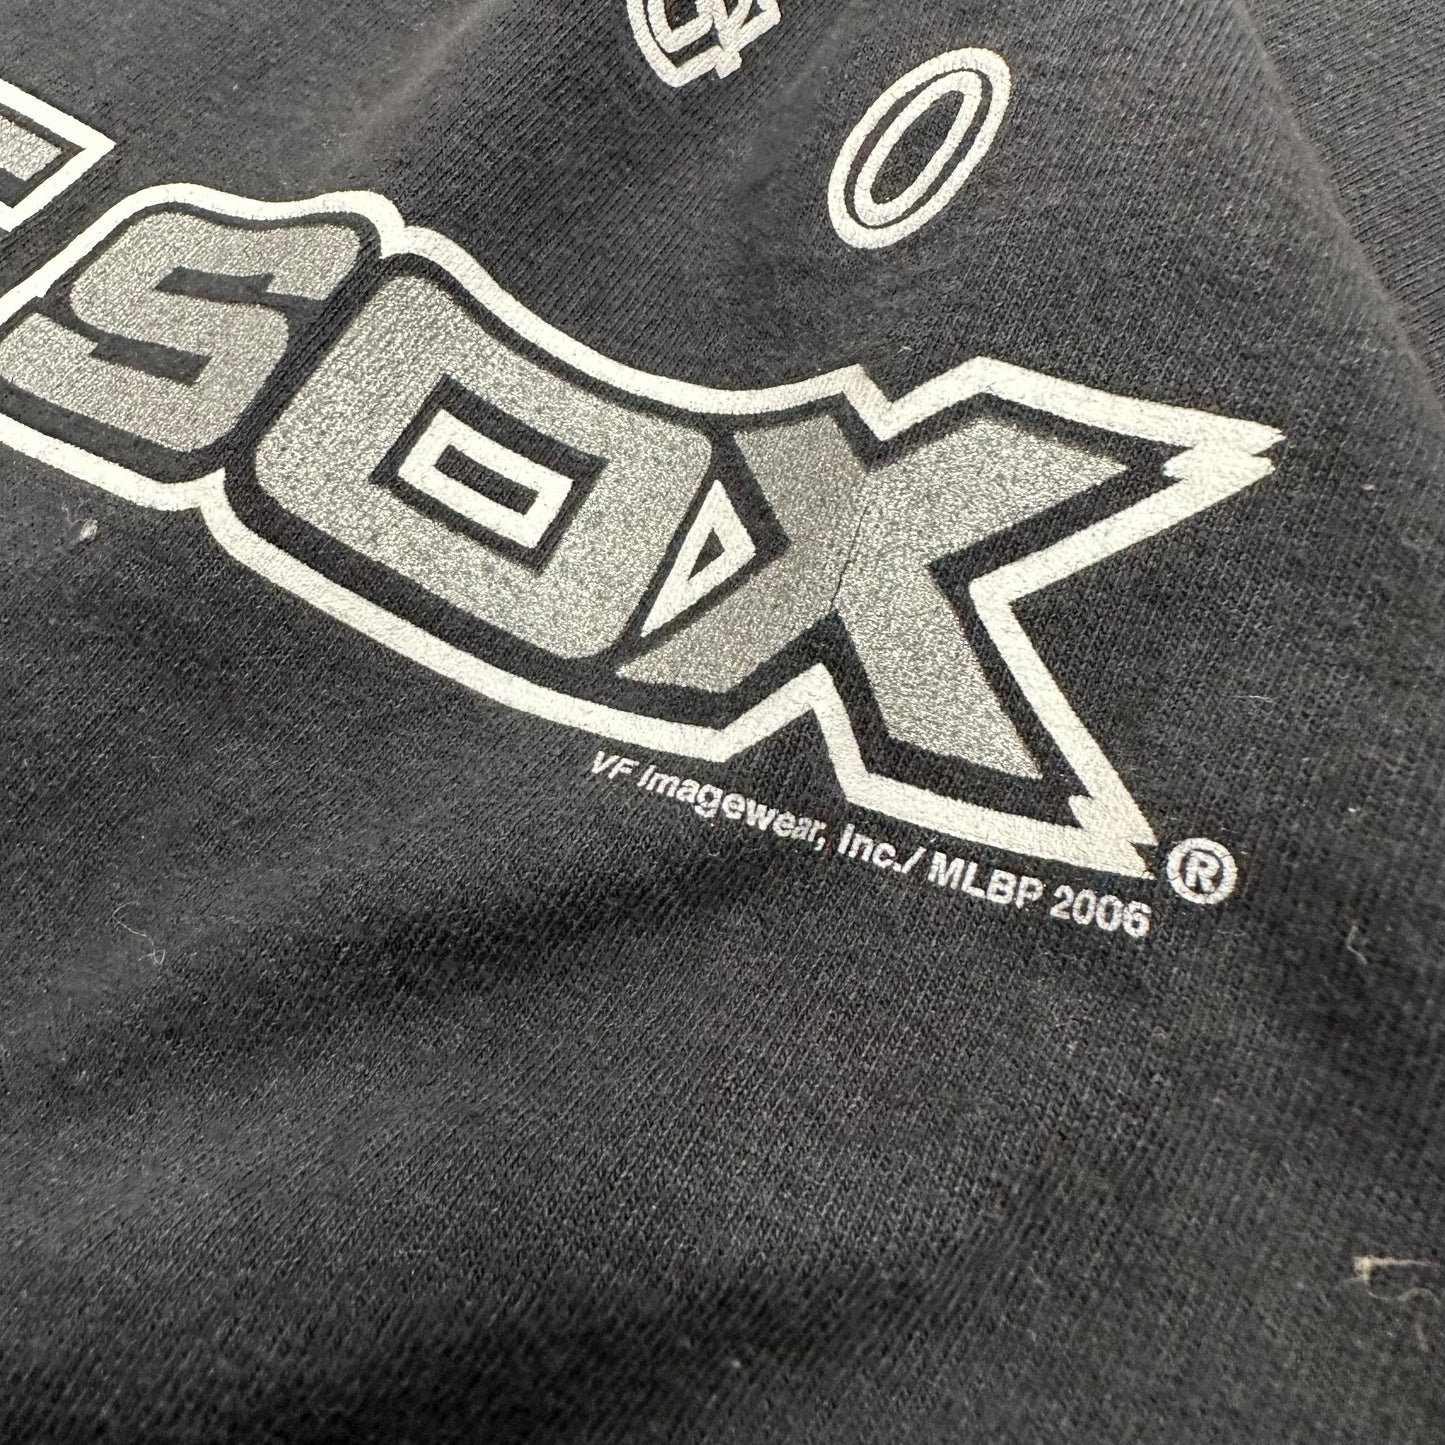 2006 Chicago White Sox Shirt - XL